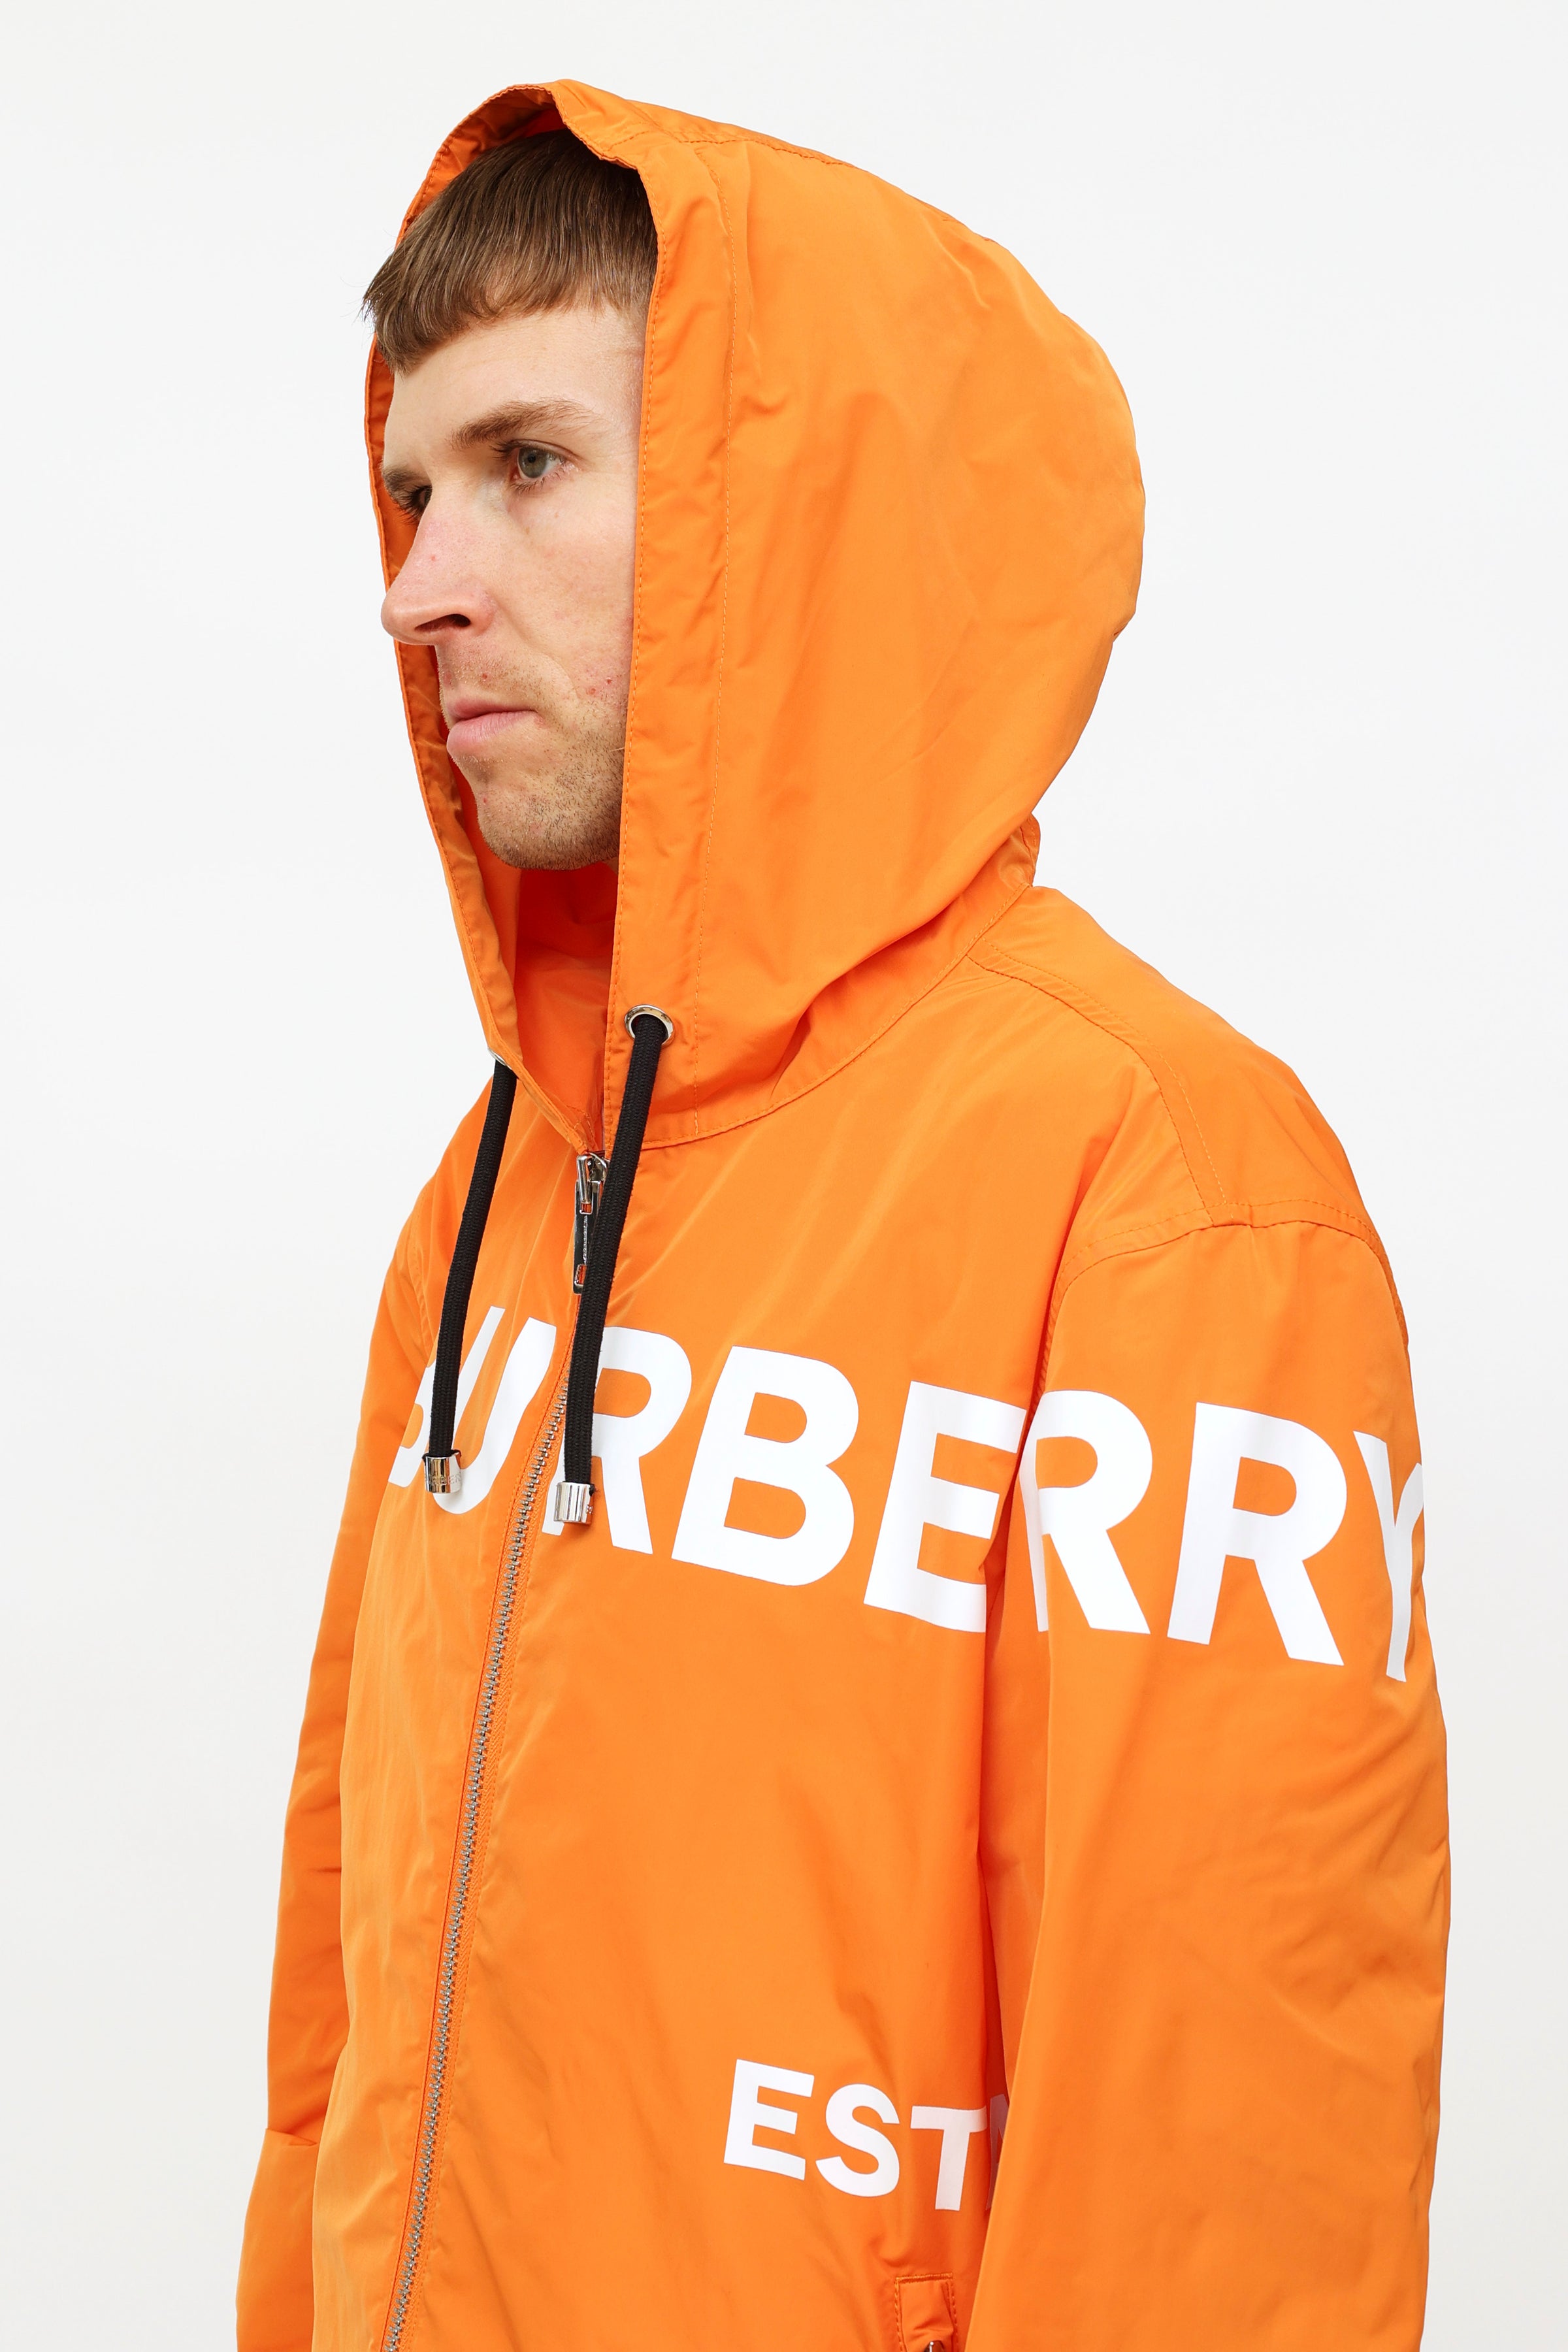 Burberry Monogram Print Nylon Hooded Jacket 80567671 Orange / Xs